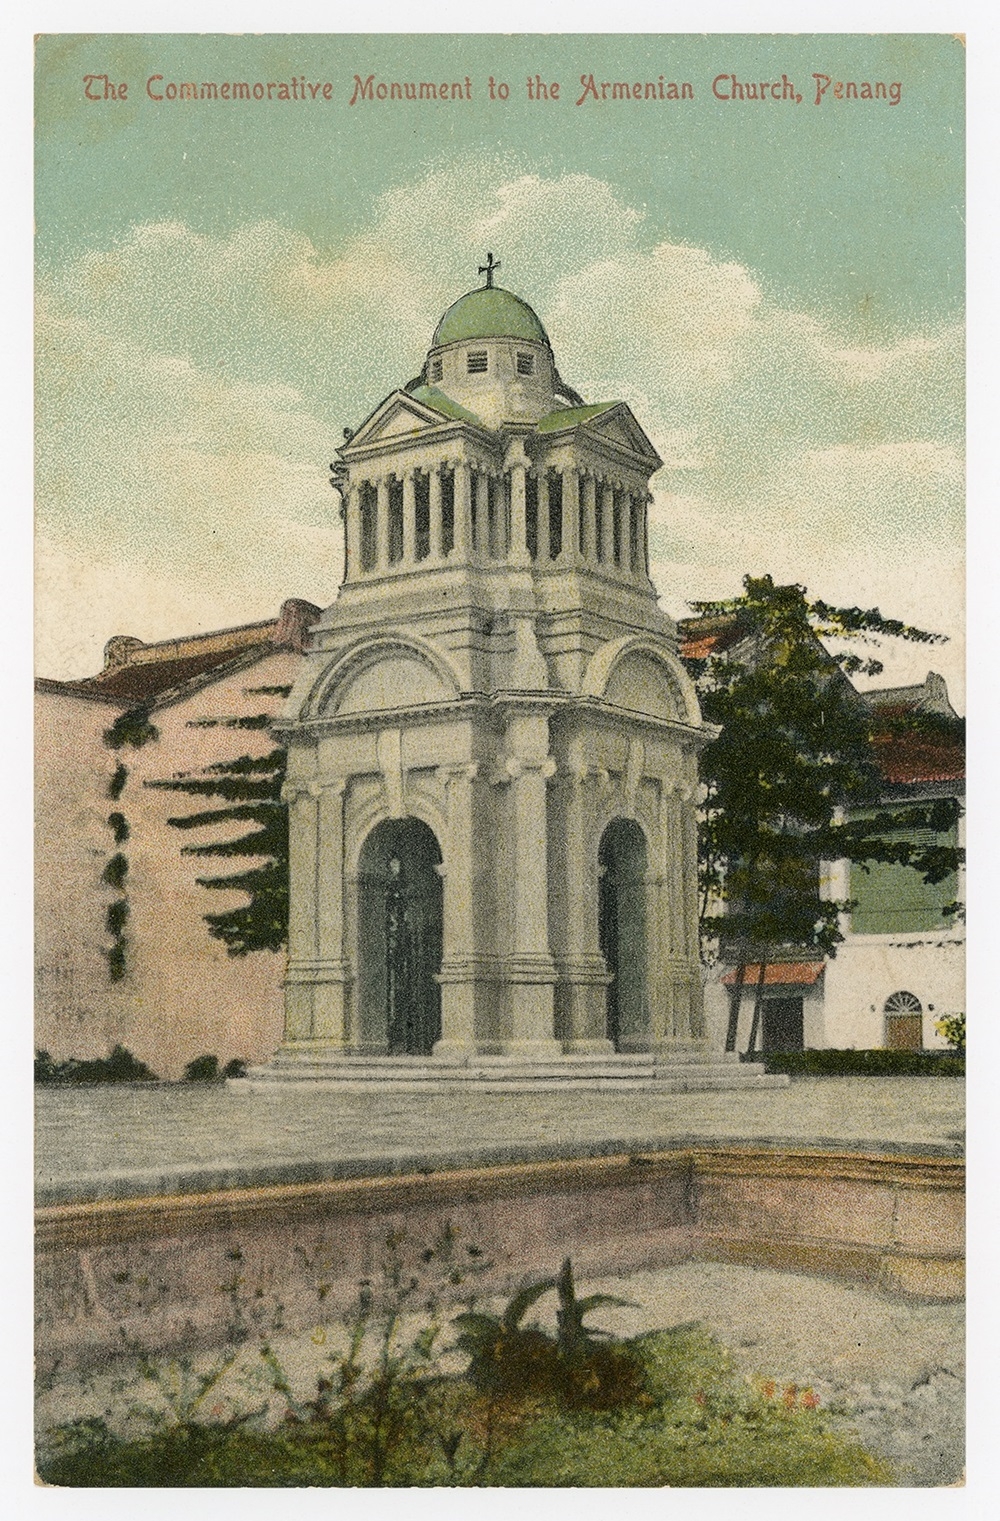 The Armenian Monument circa 1910. — Postcard image courtesy of Marcus Langdon